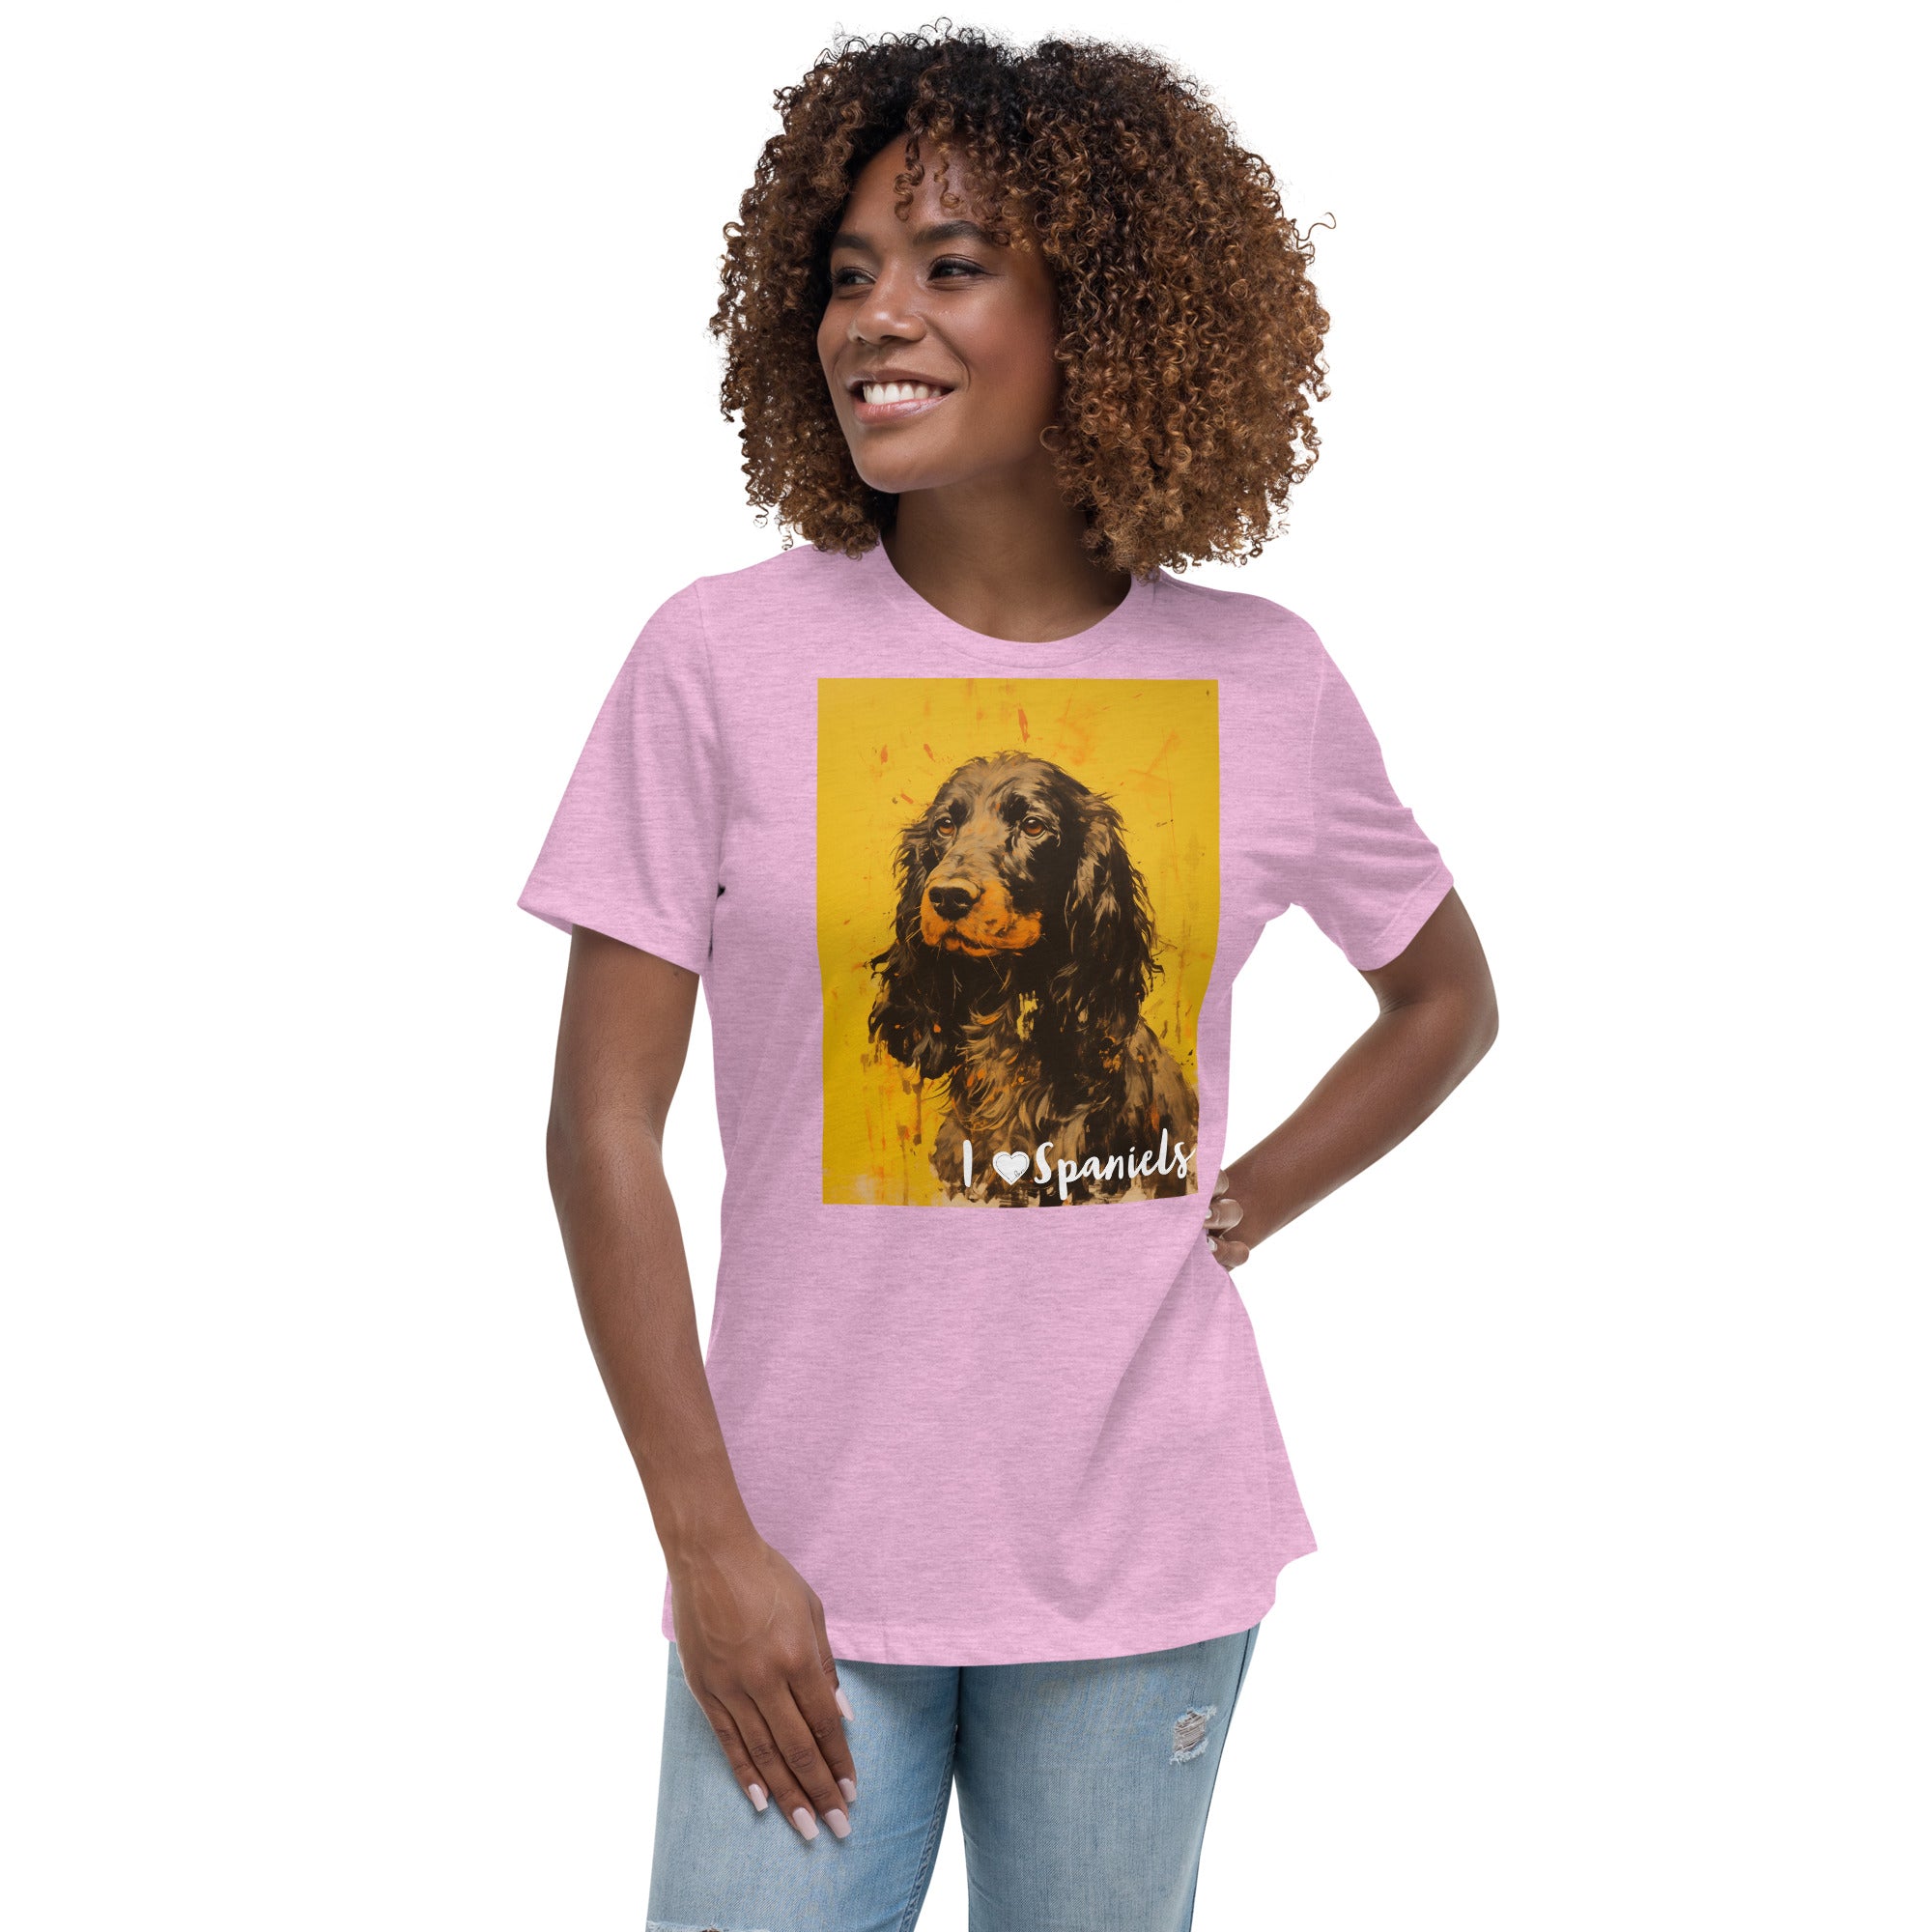 Women's Relaxed T-Shirt - I ❤ Dogs - English Springer Spaniel